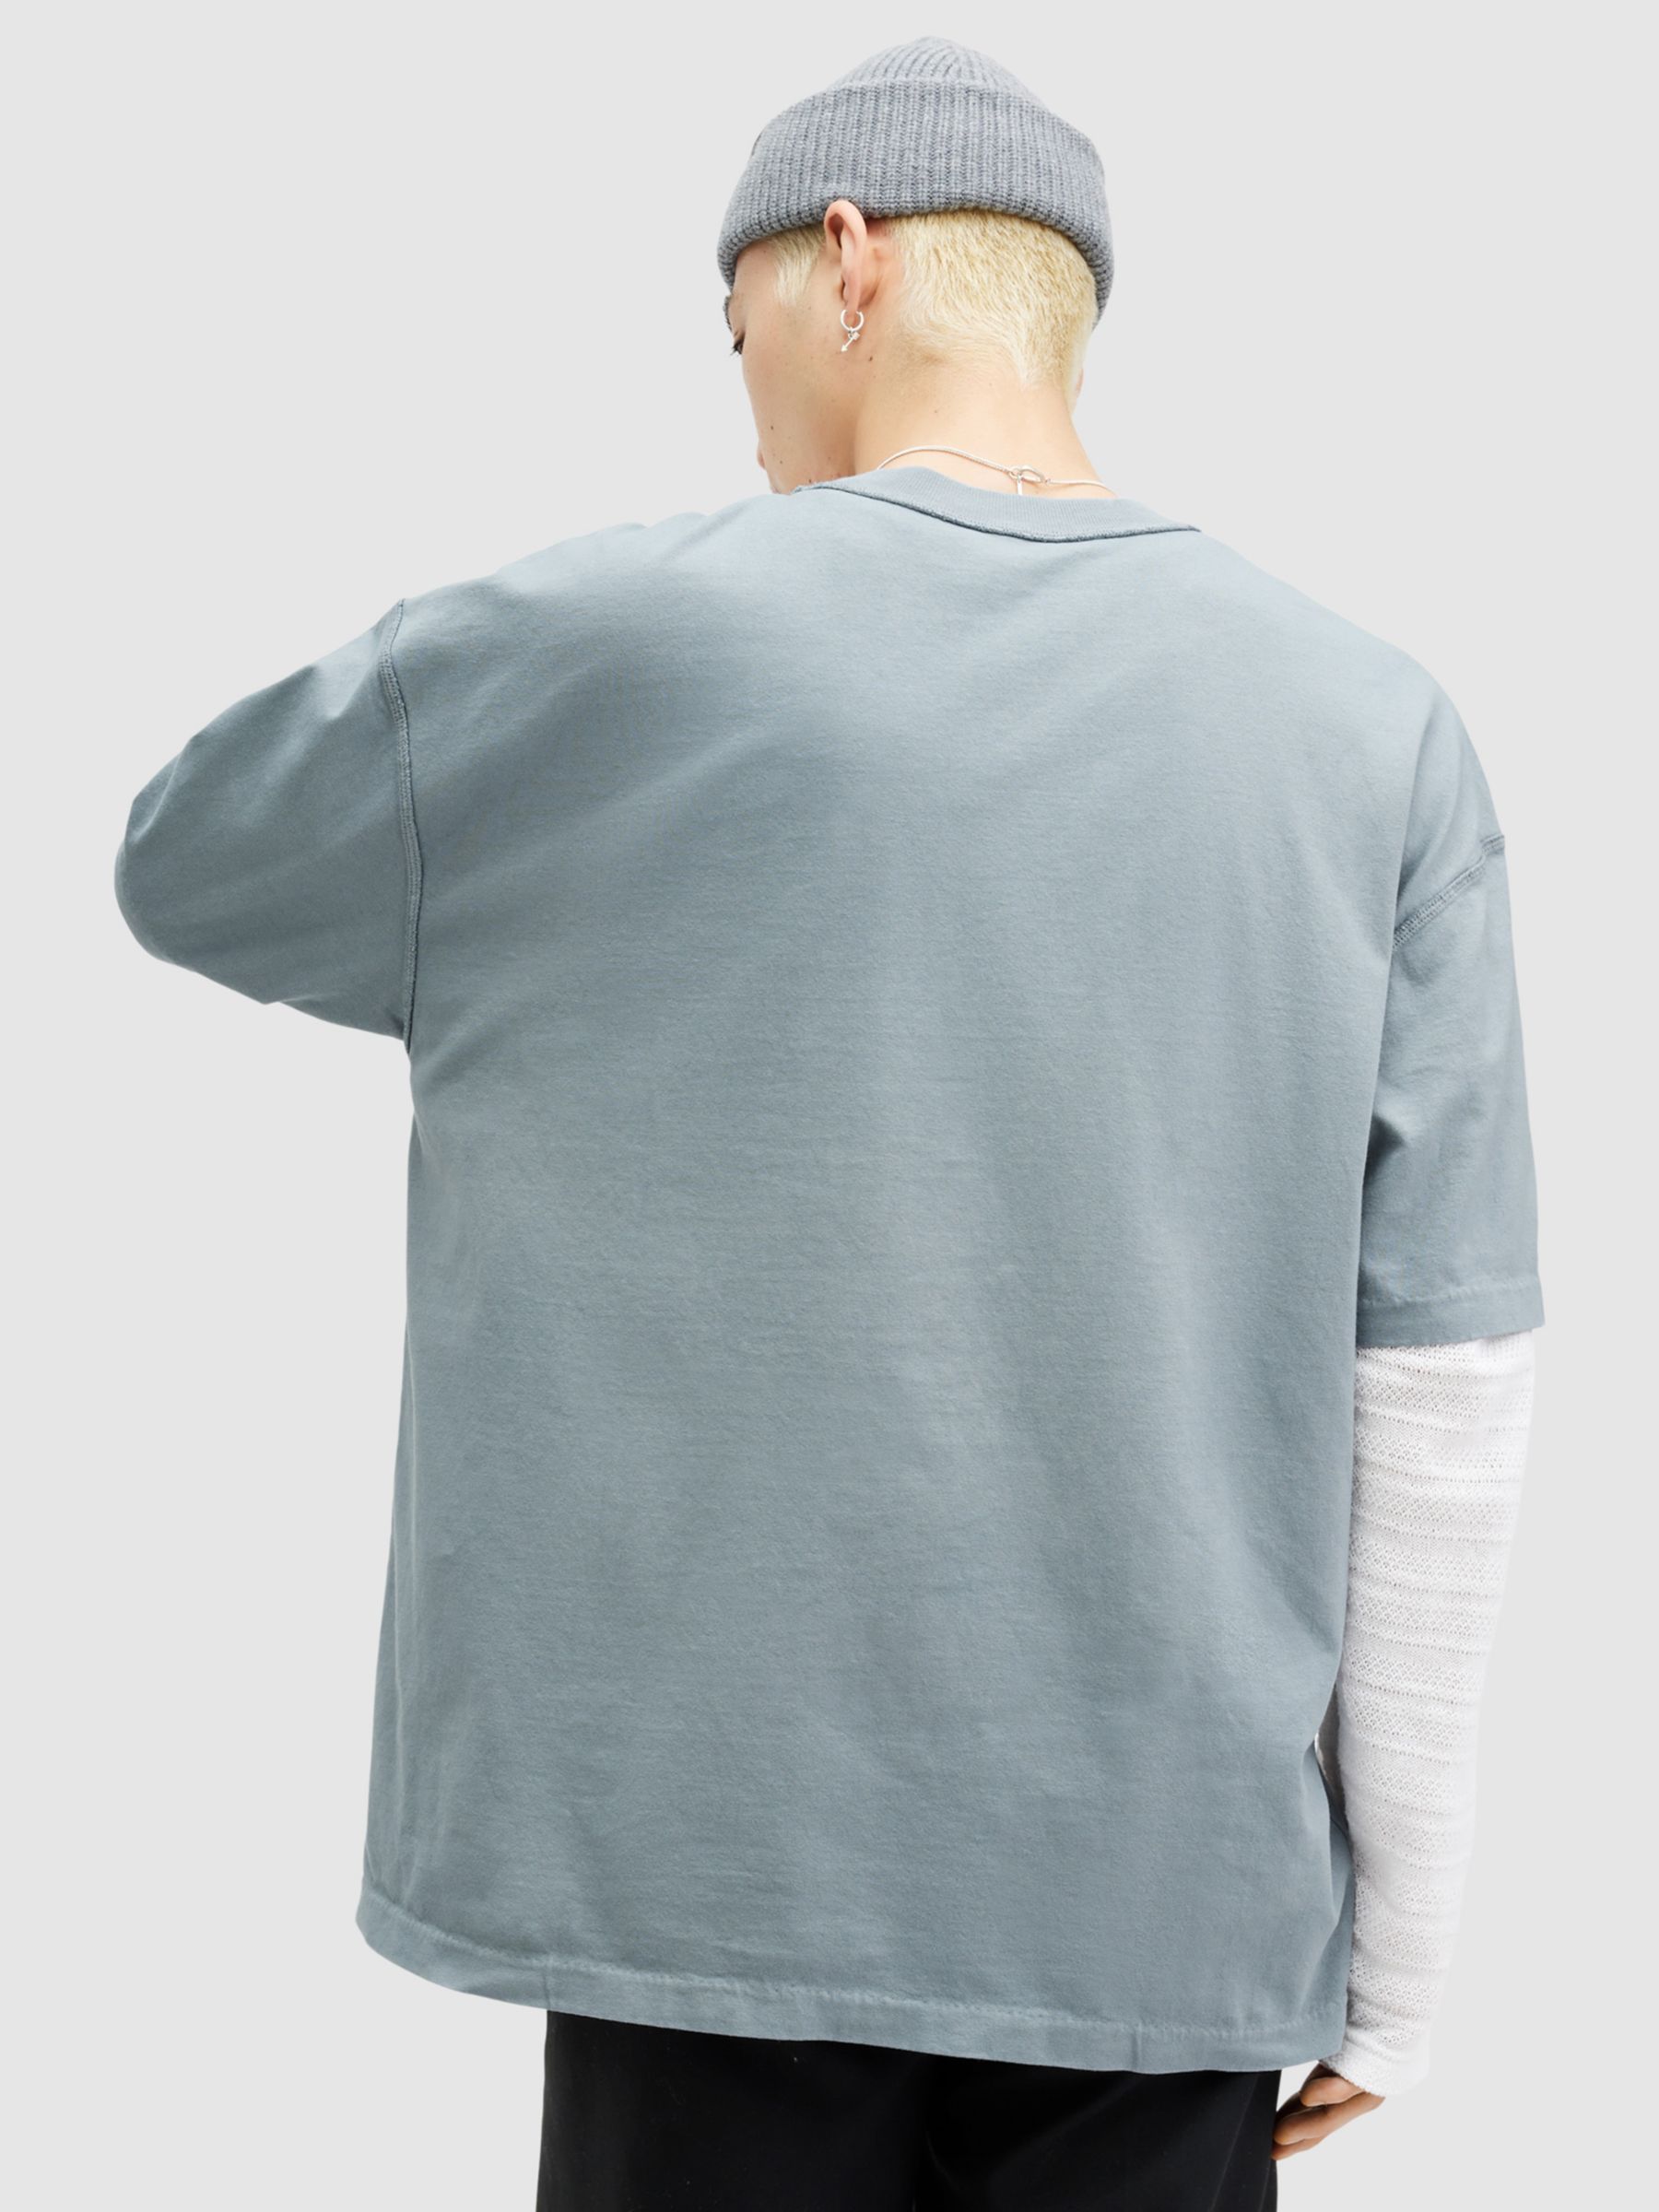 Buy AllSaints Isac Short Sleeve Crew T-Shirt Online at johnlewis.com